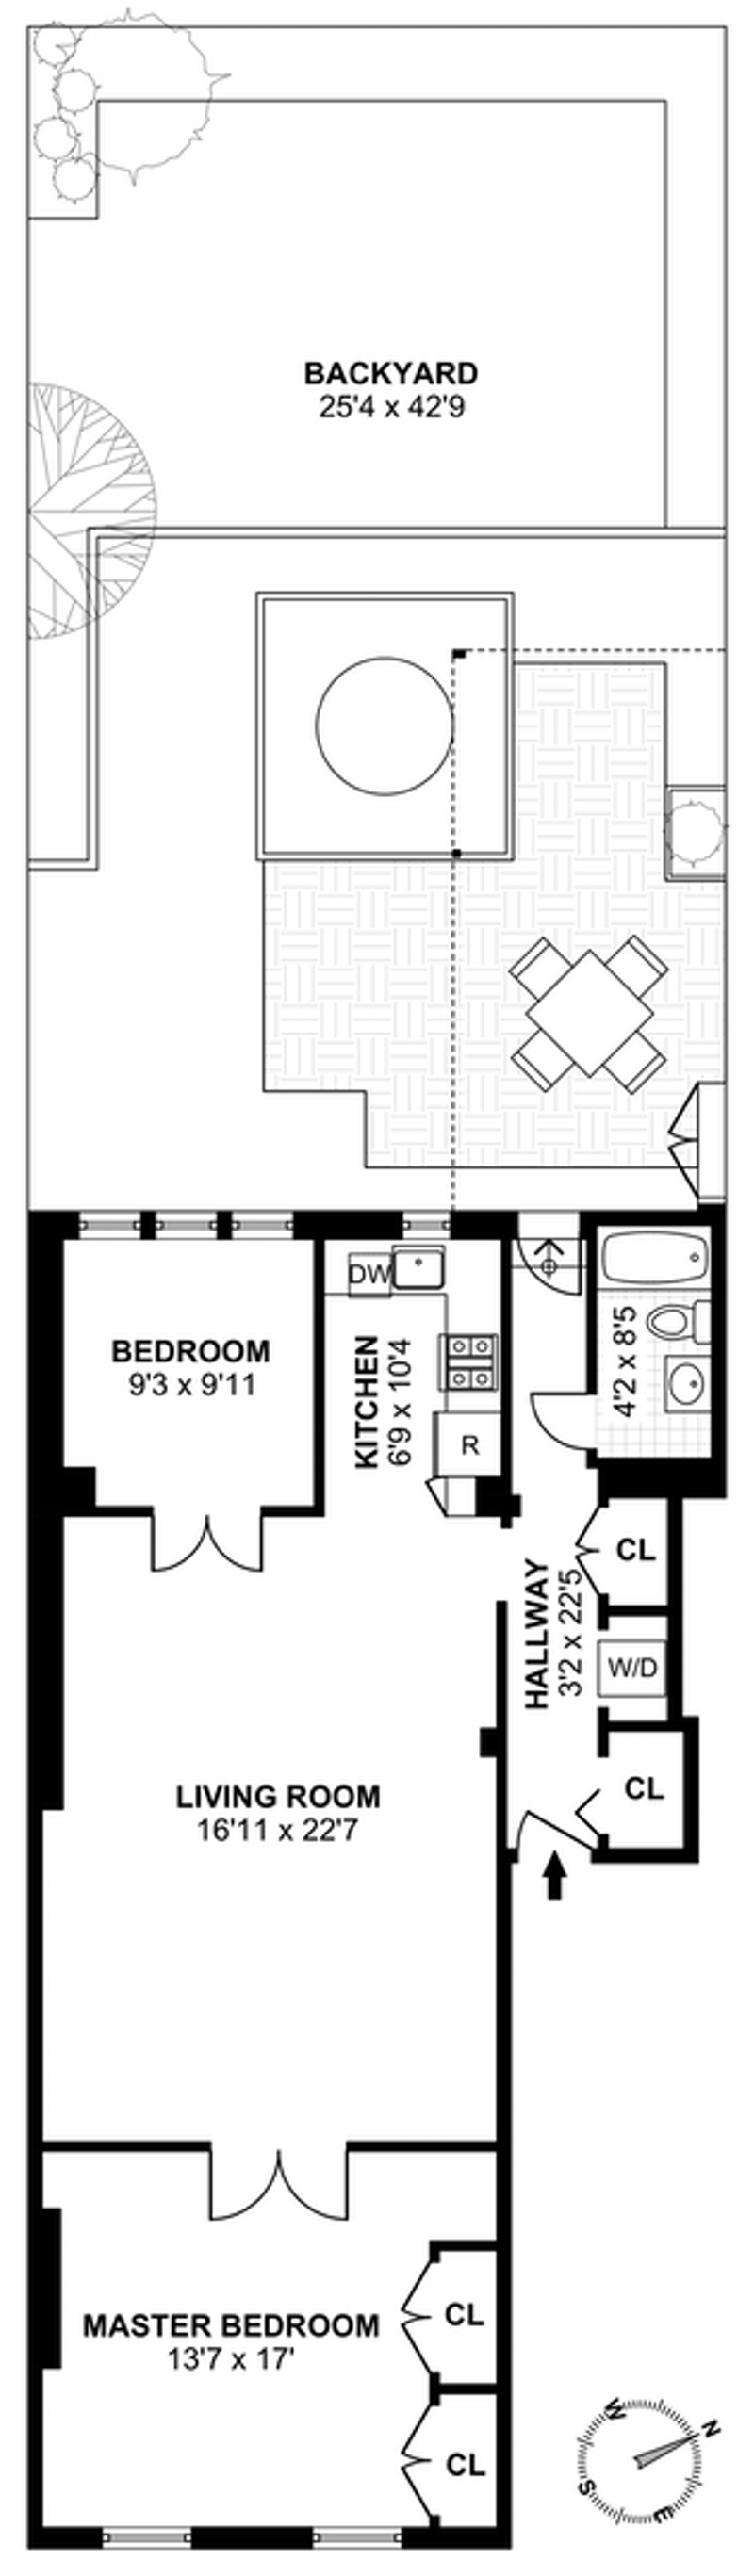 Floorplan for 292 Clinton Street, 1